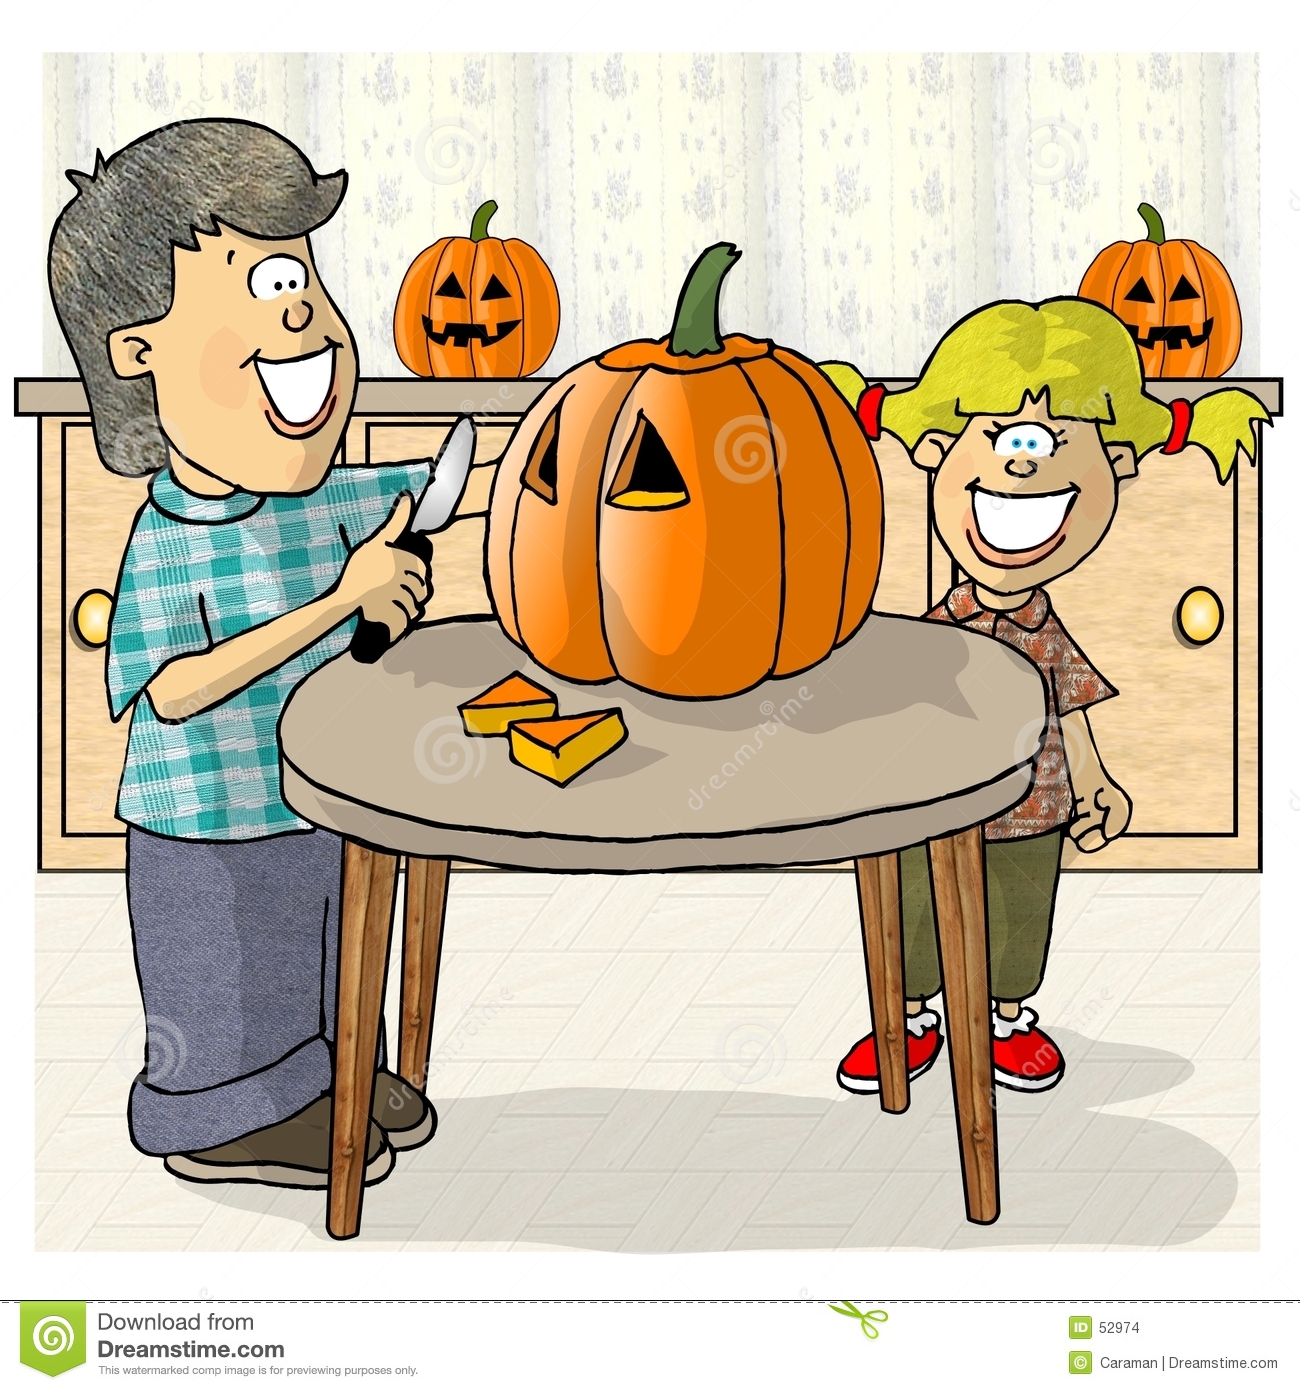 Pumpkin Carving Title The JPG